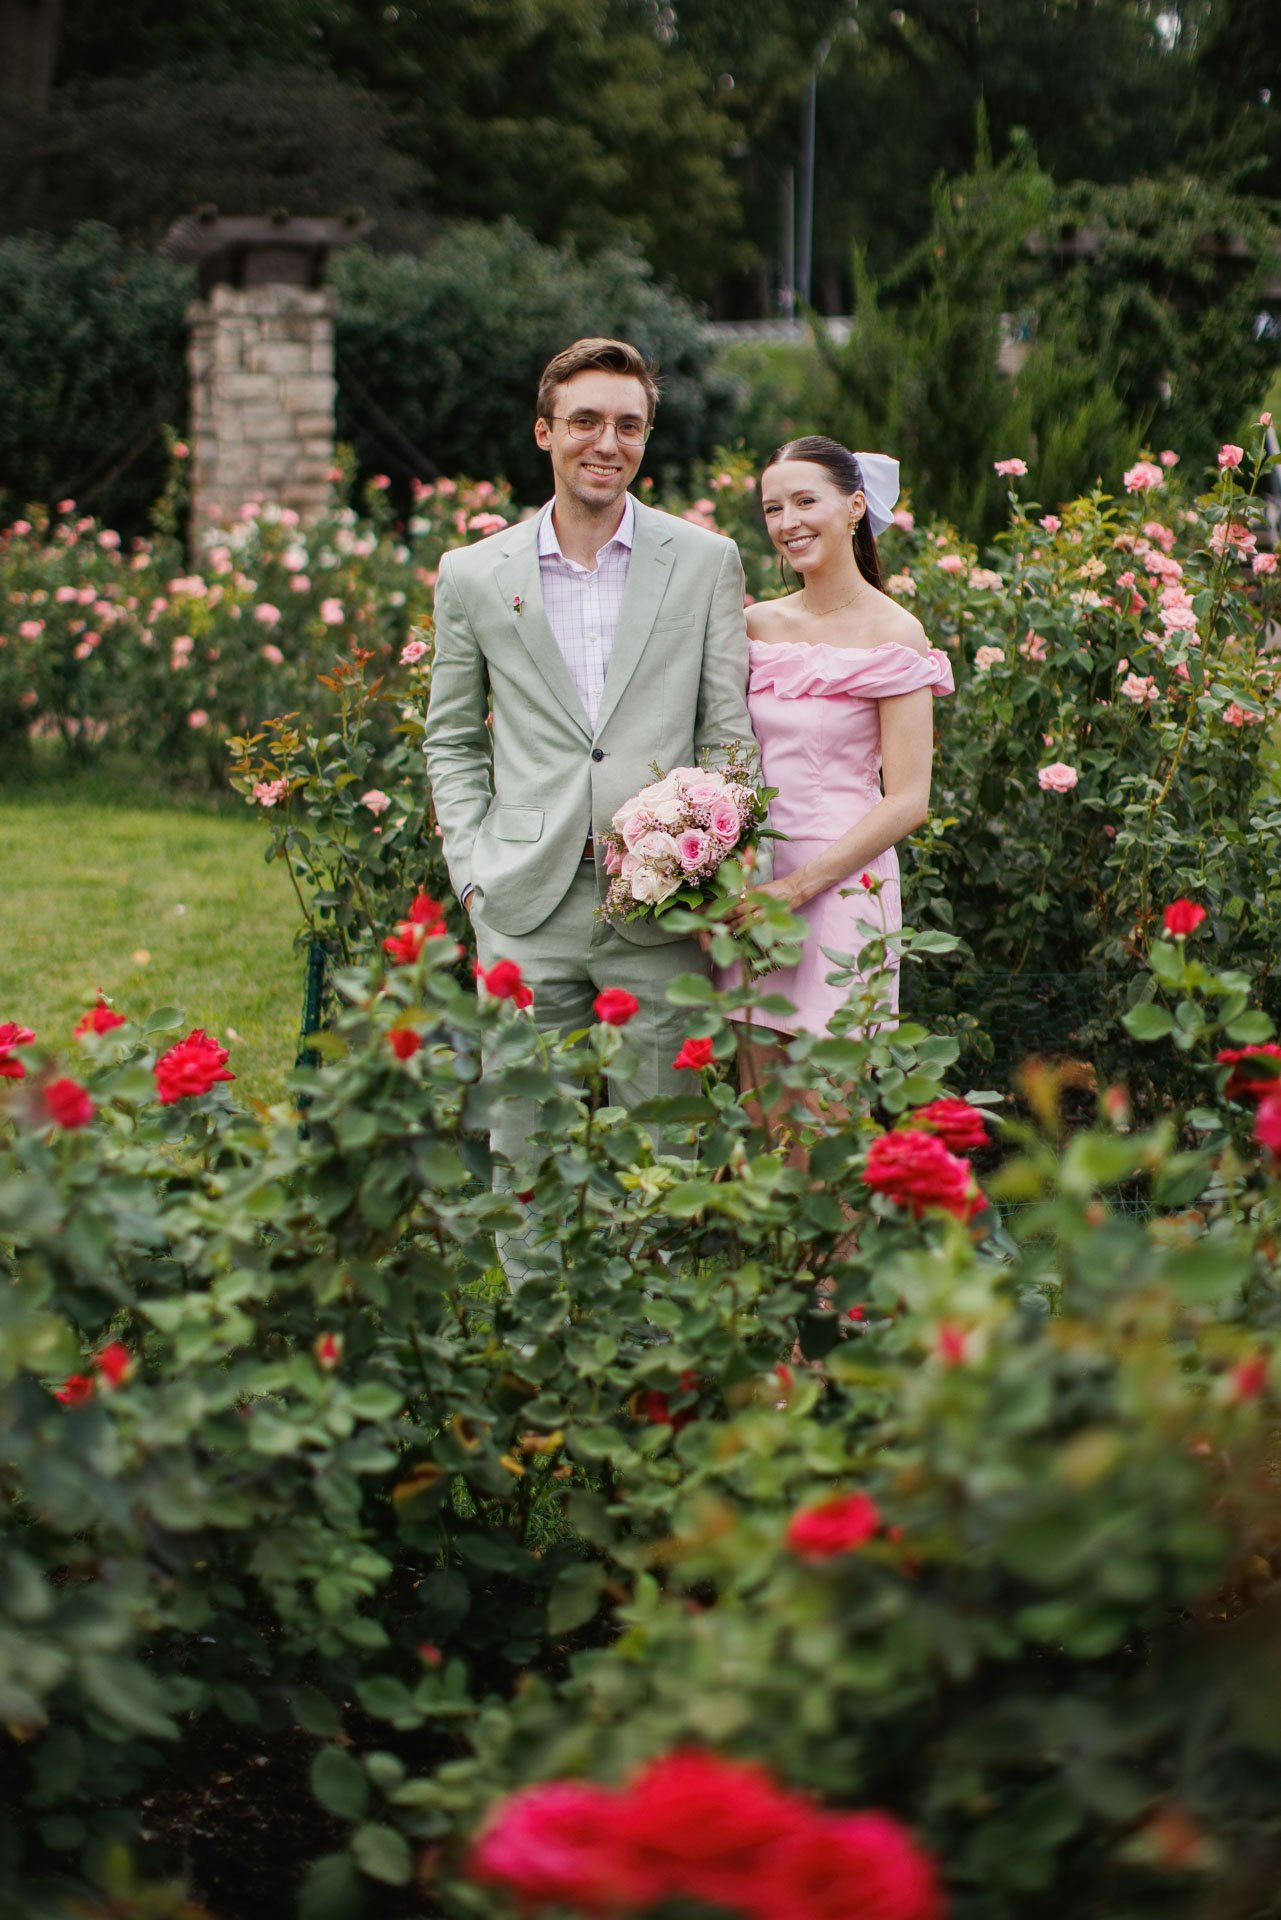 Kindling Wedding Photography Kansas City x Loose Park Rose Garden Wedding Ceremony_04.JPG